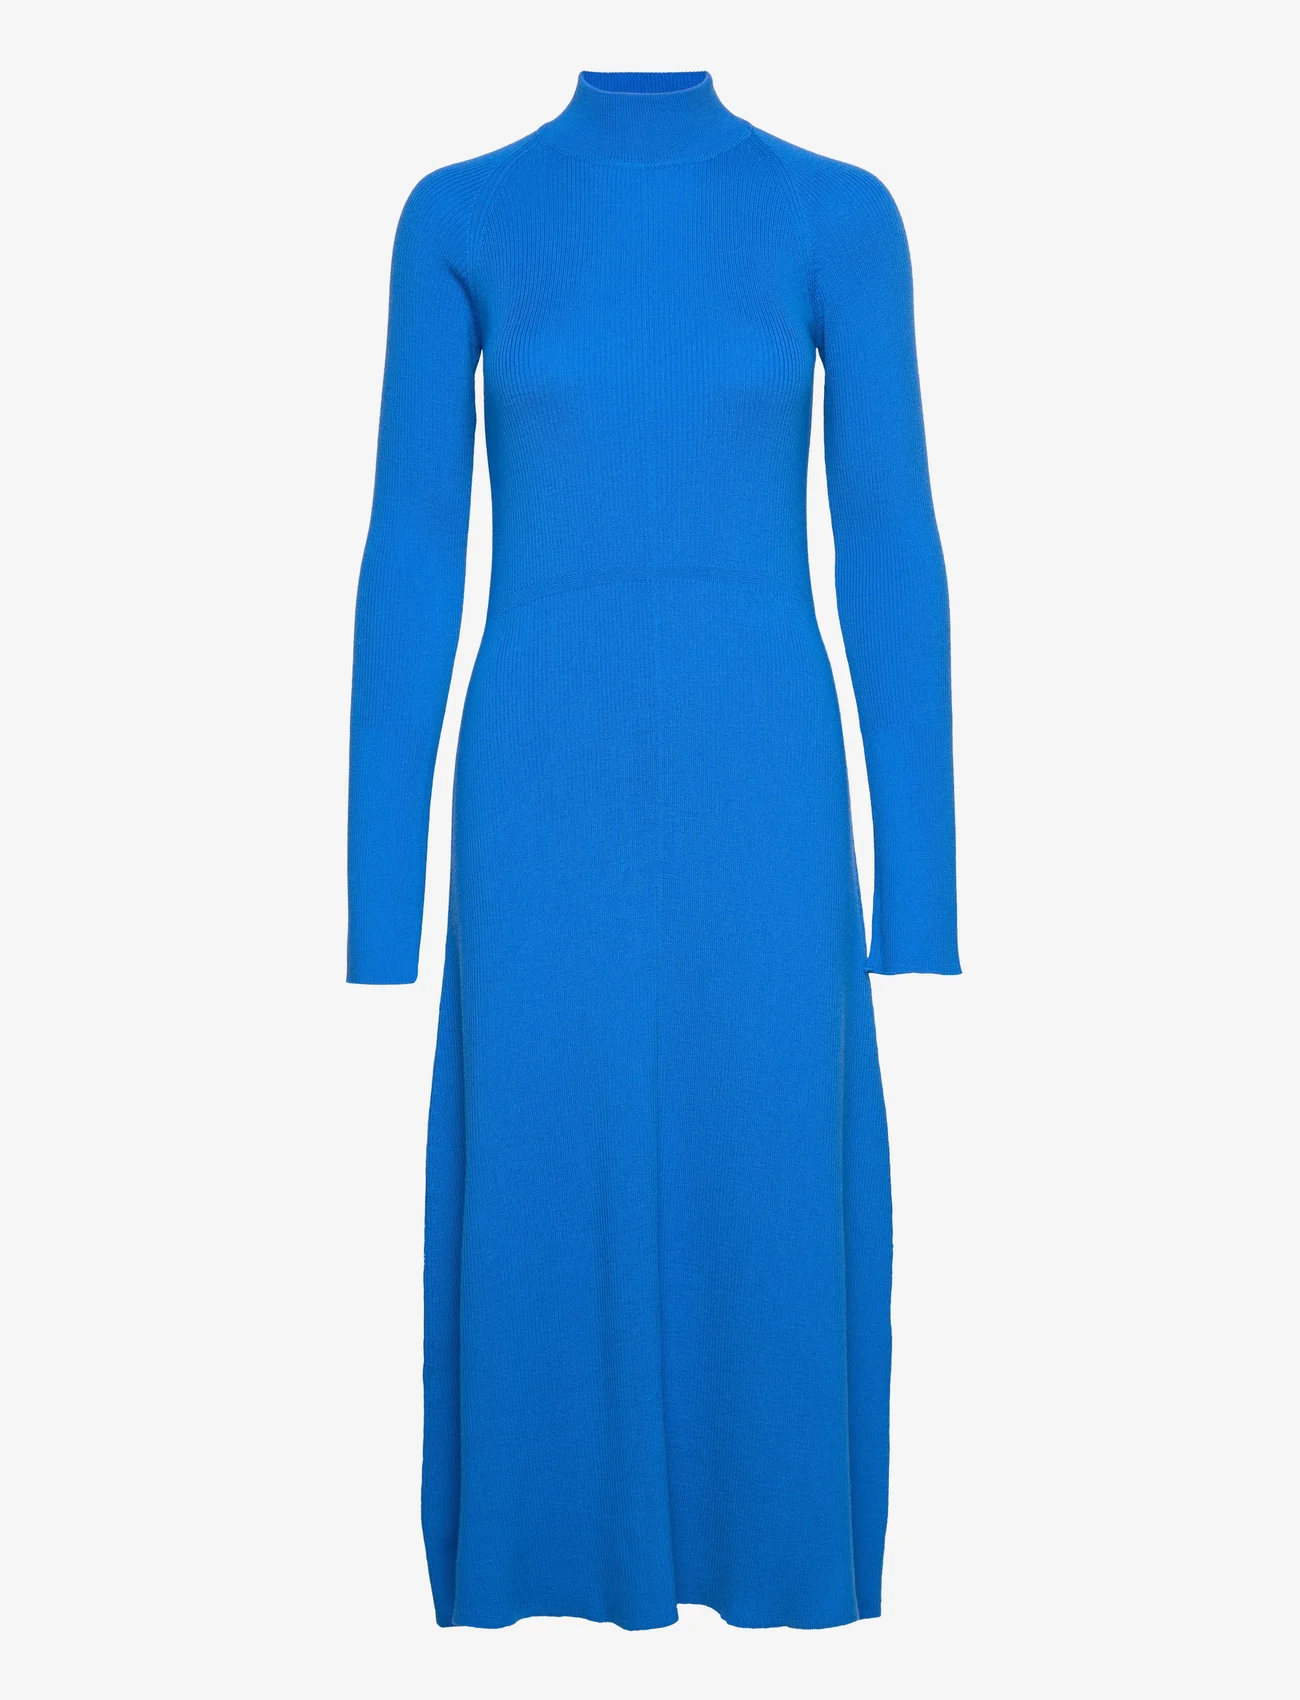 IVY OAK - Rib Knit Dress - etuikleider - cobalt blue - 0